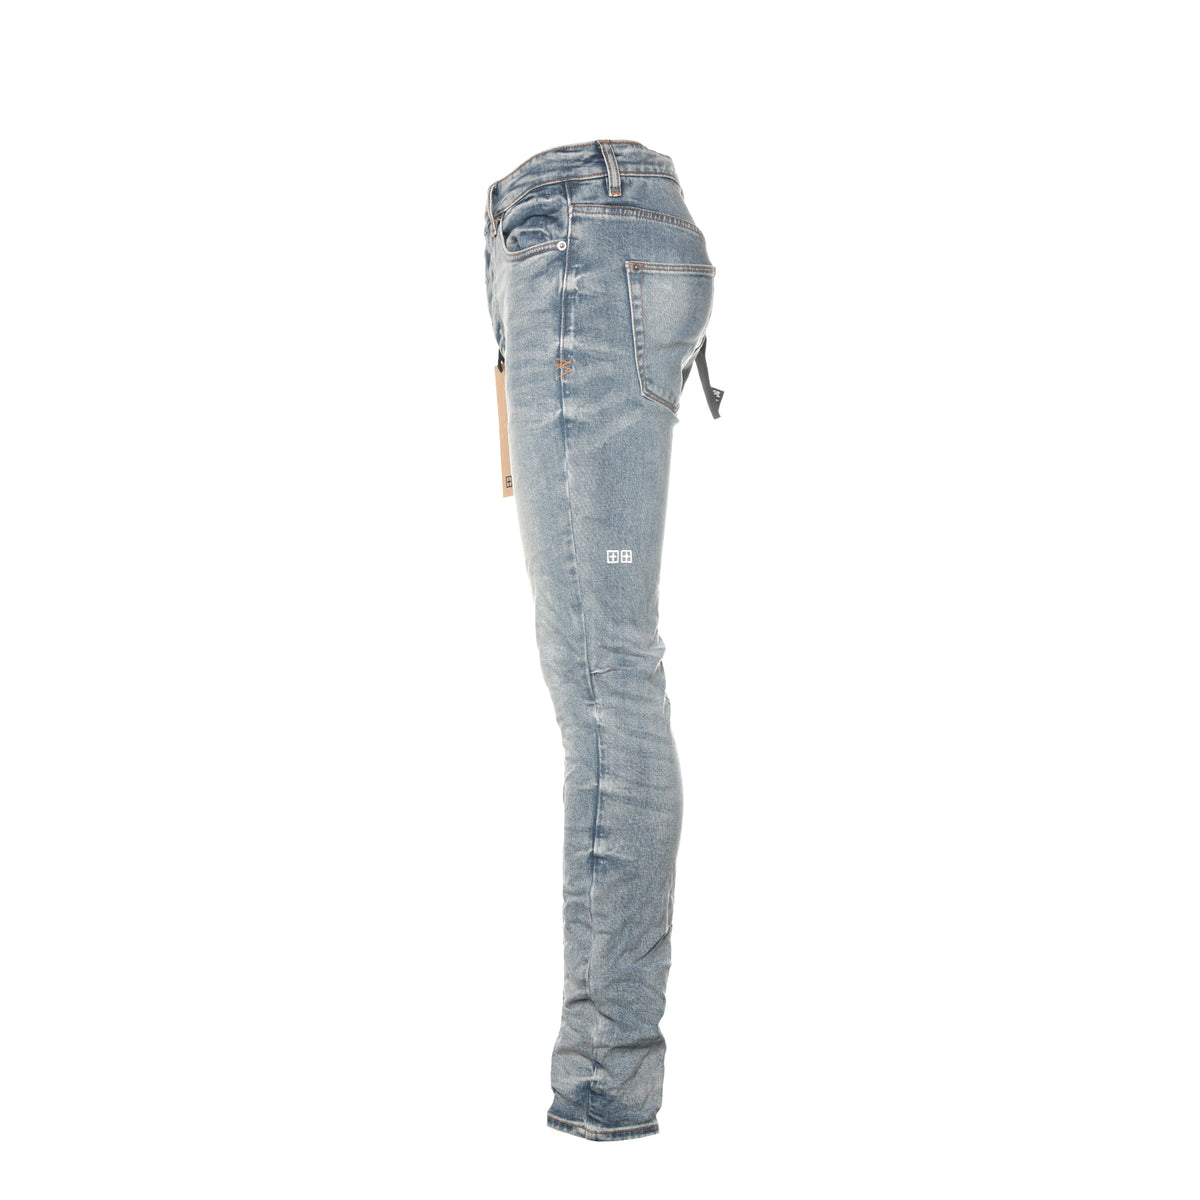 Ksubi Chitch "Pure Dynamite" Men's Skinny Jeans - SIZE Boutique